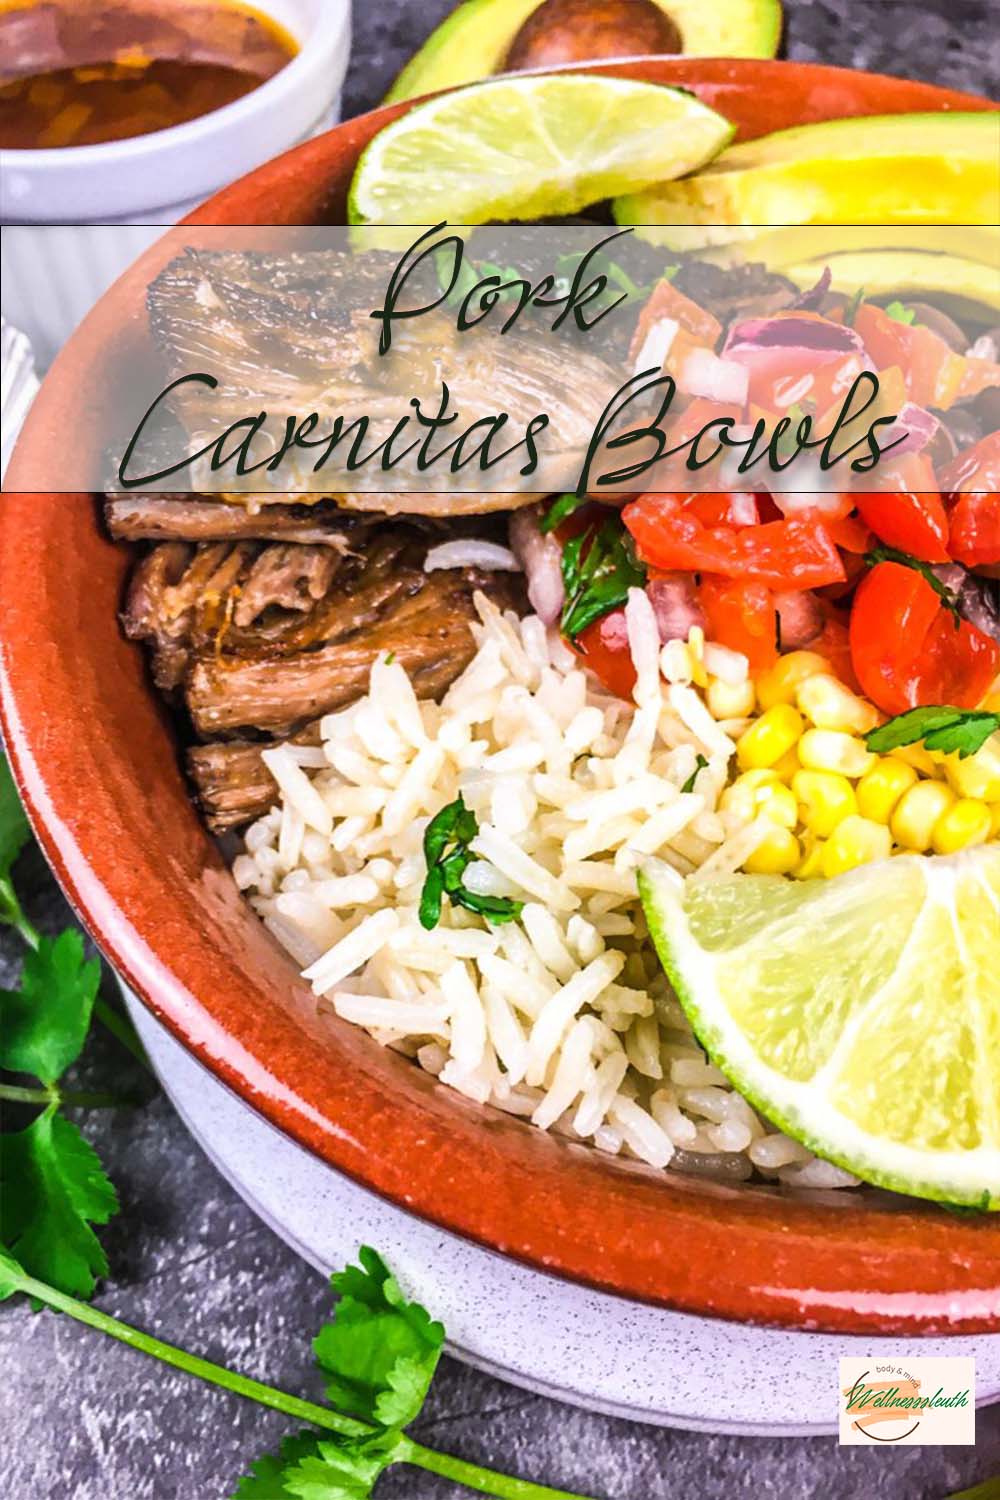 Pork Carnitas Bowls